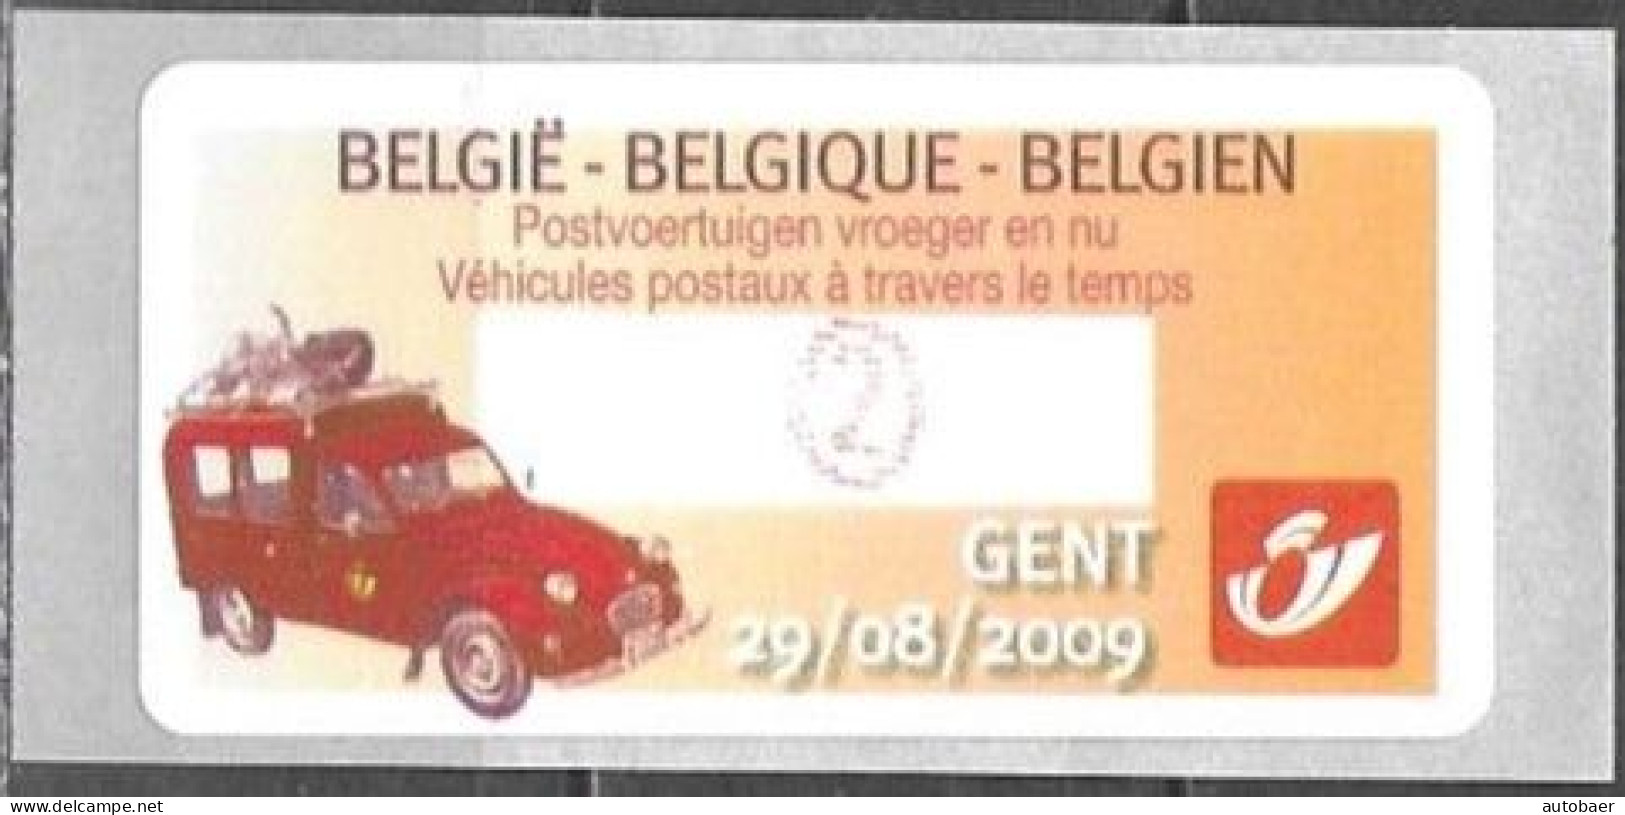 Belgium Belgique Belgien 2009 ATM Machine Stamp Gent Citroen 2CV Mi. No. 67 "2" MNH Neuf ** Postfrisch - Nuevos